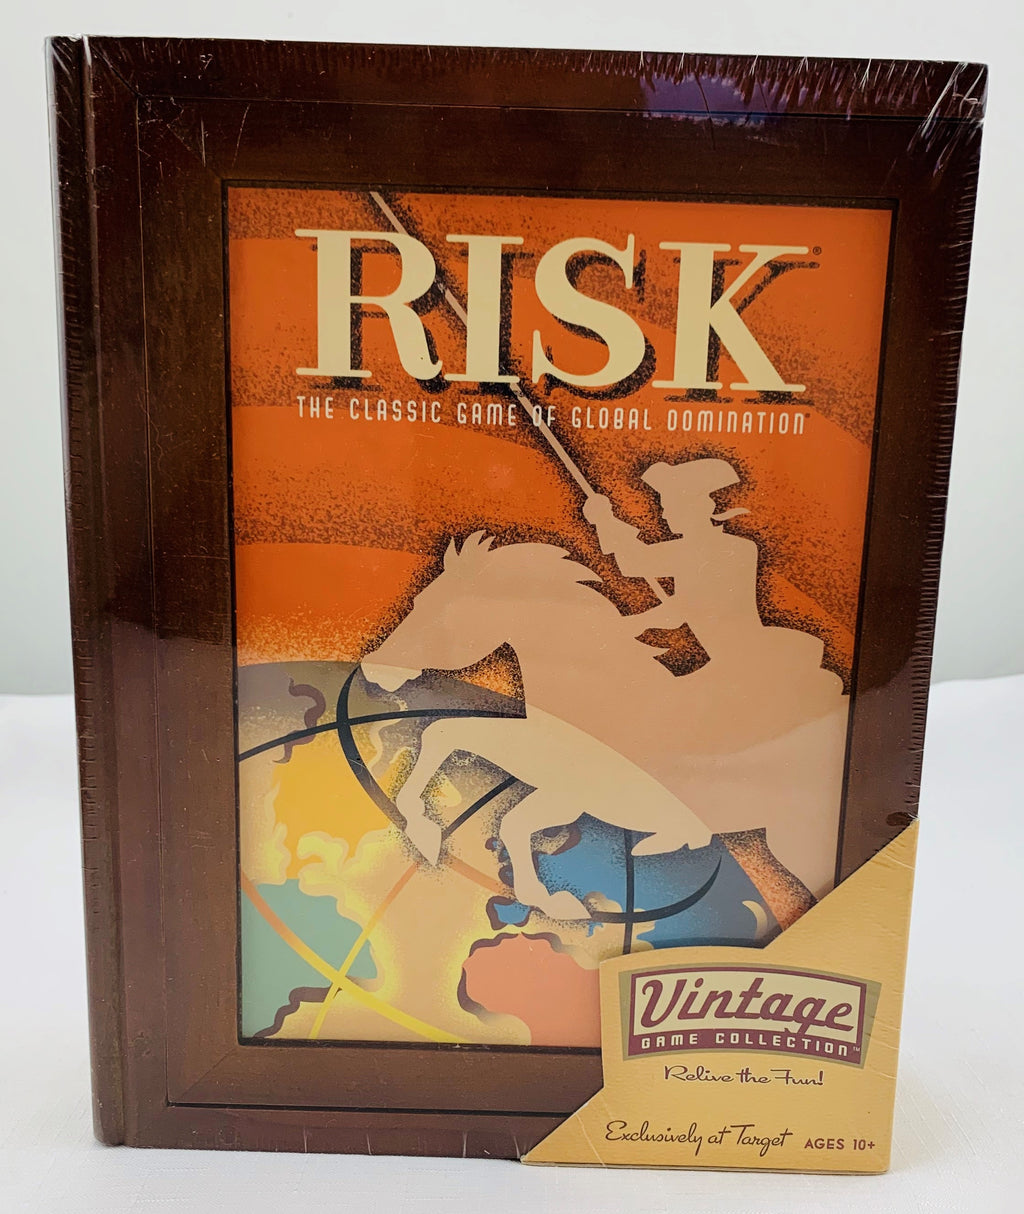 Risk Wood Bookshelf Game - 2005 - Hasbro - New